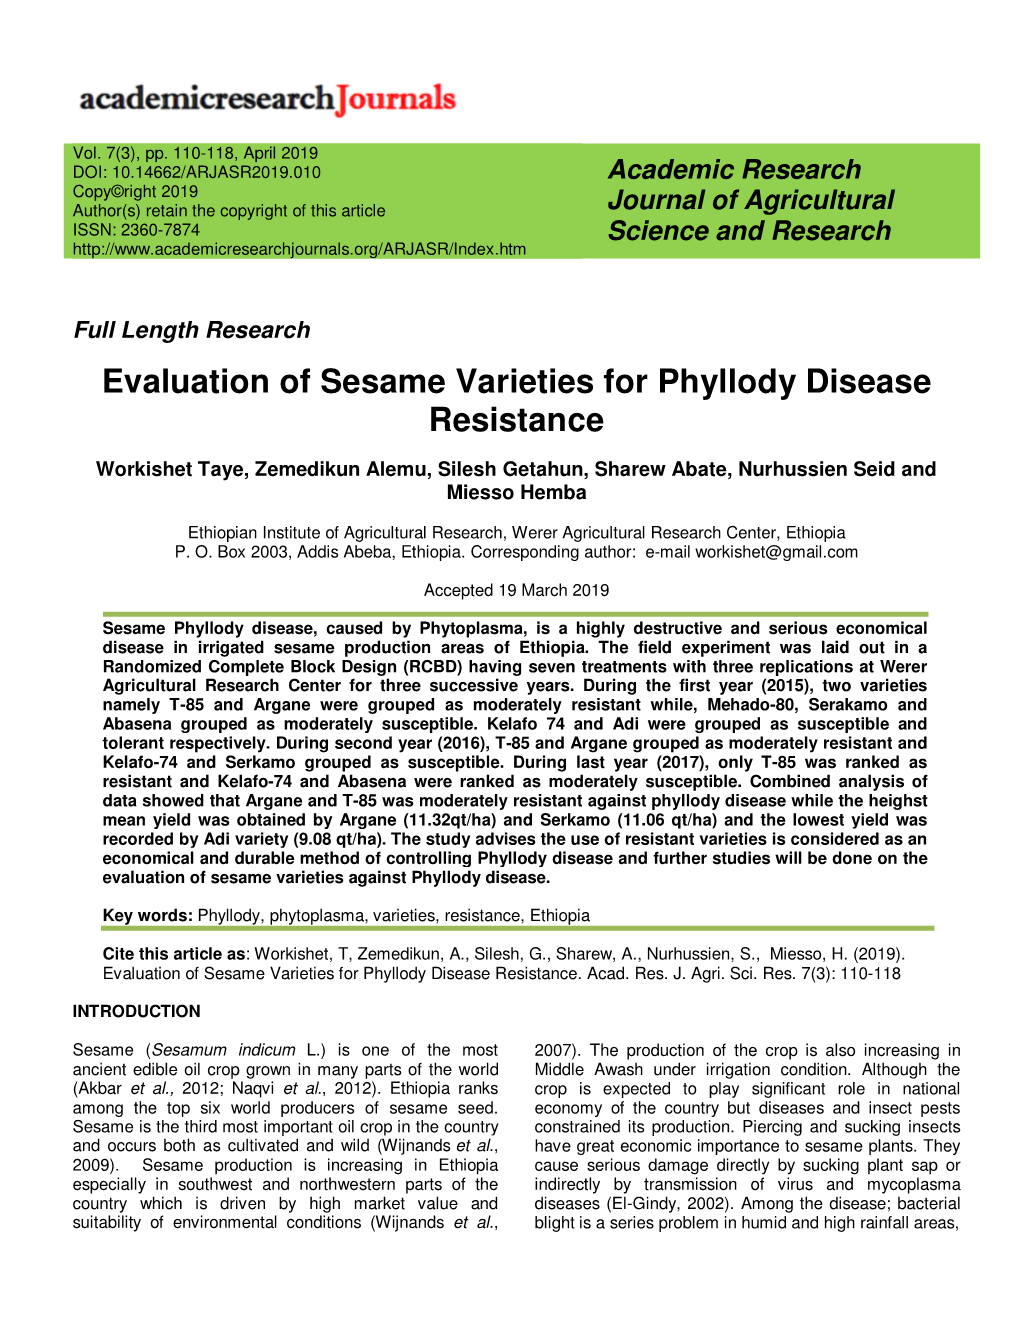 Evaluation of Sesame Varieties for Phyllody Disease Resistance